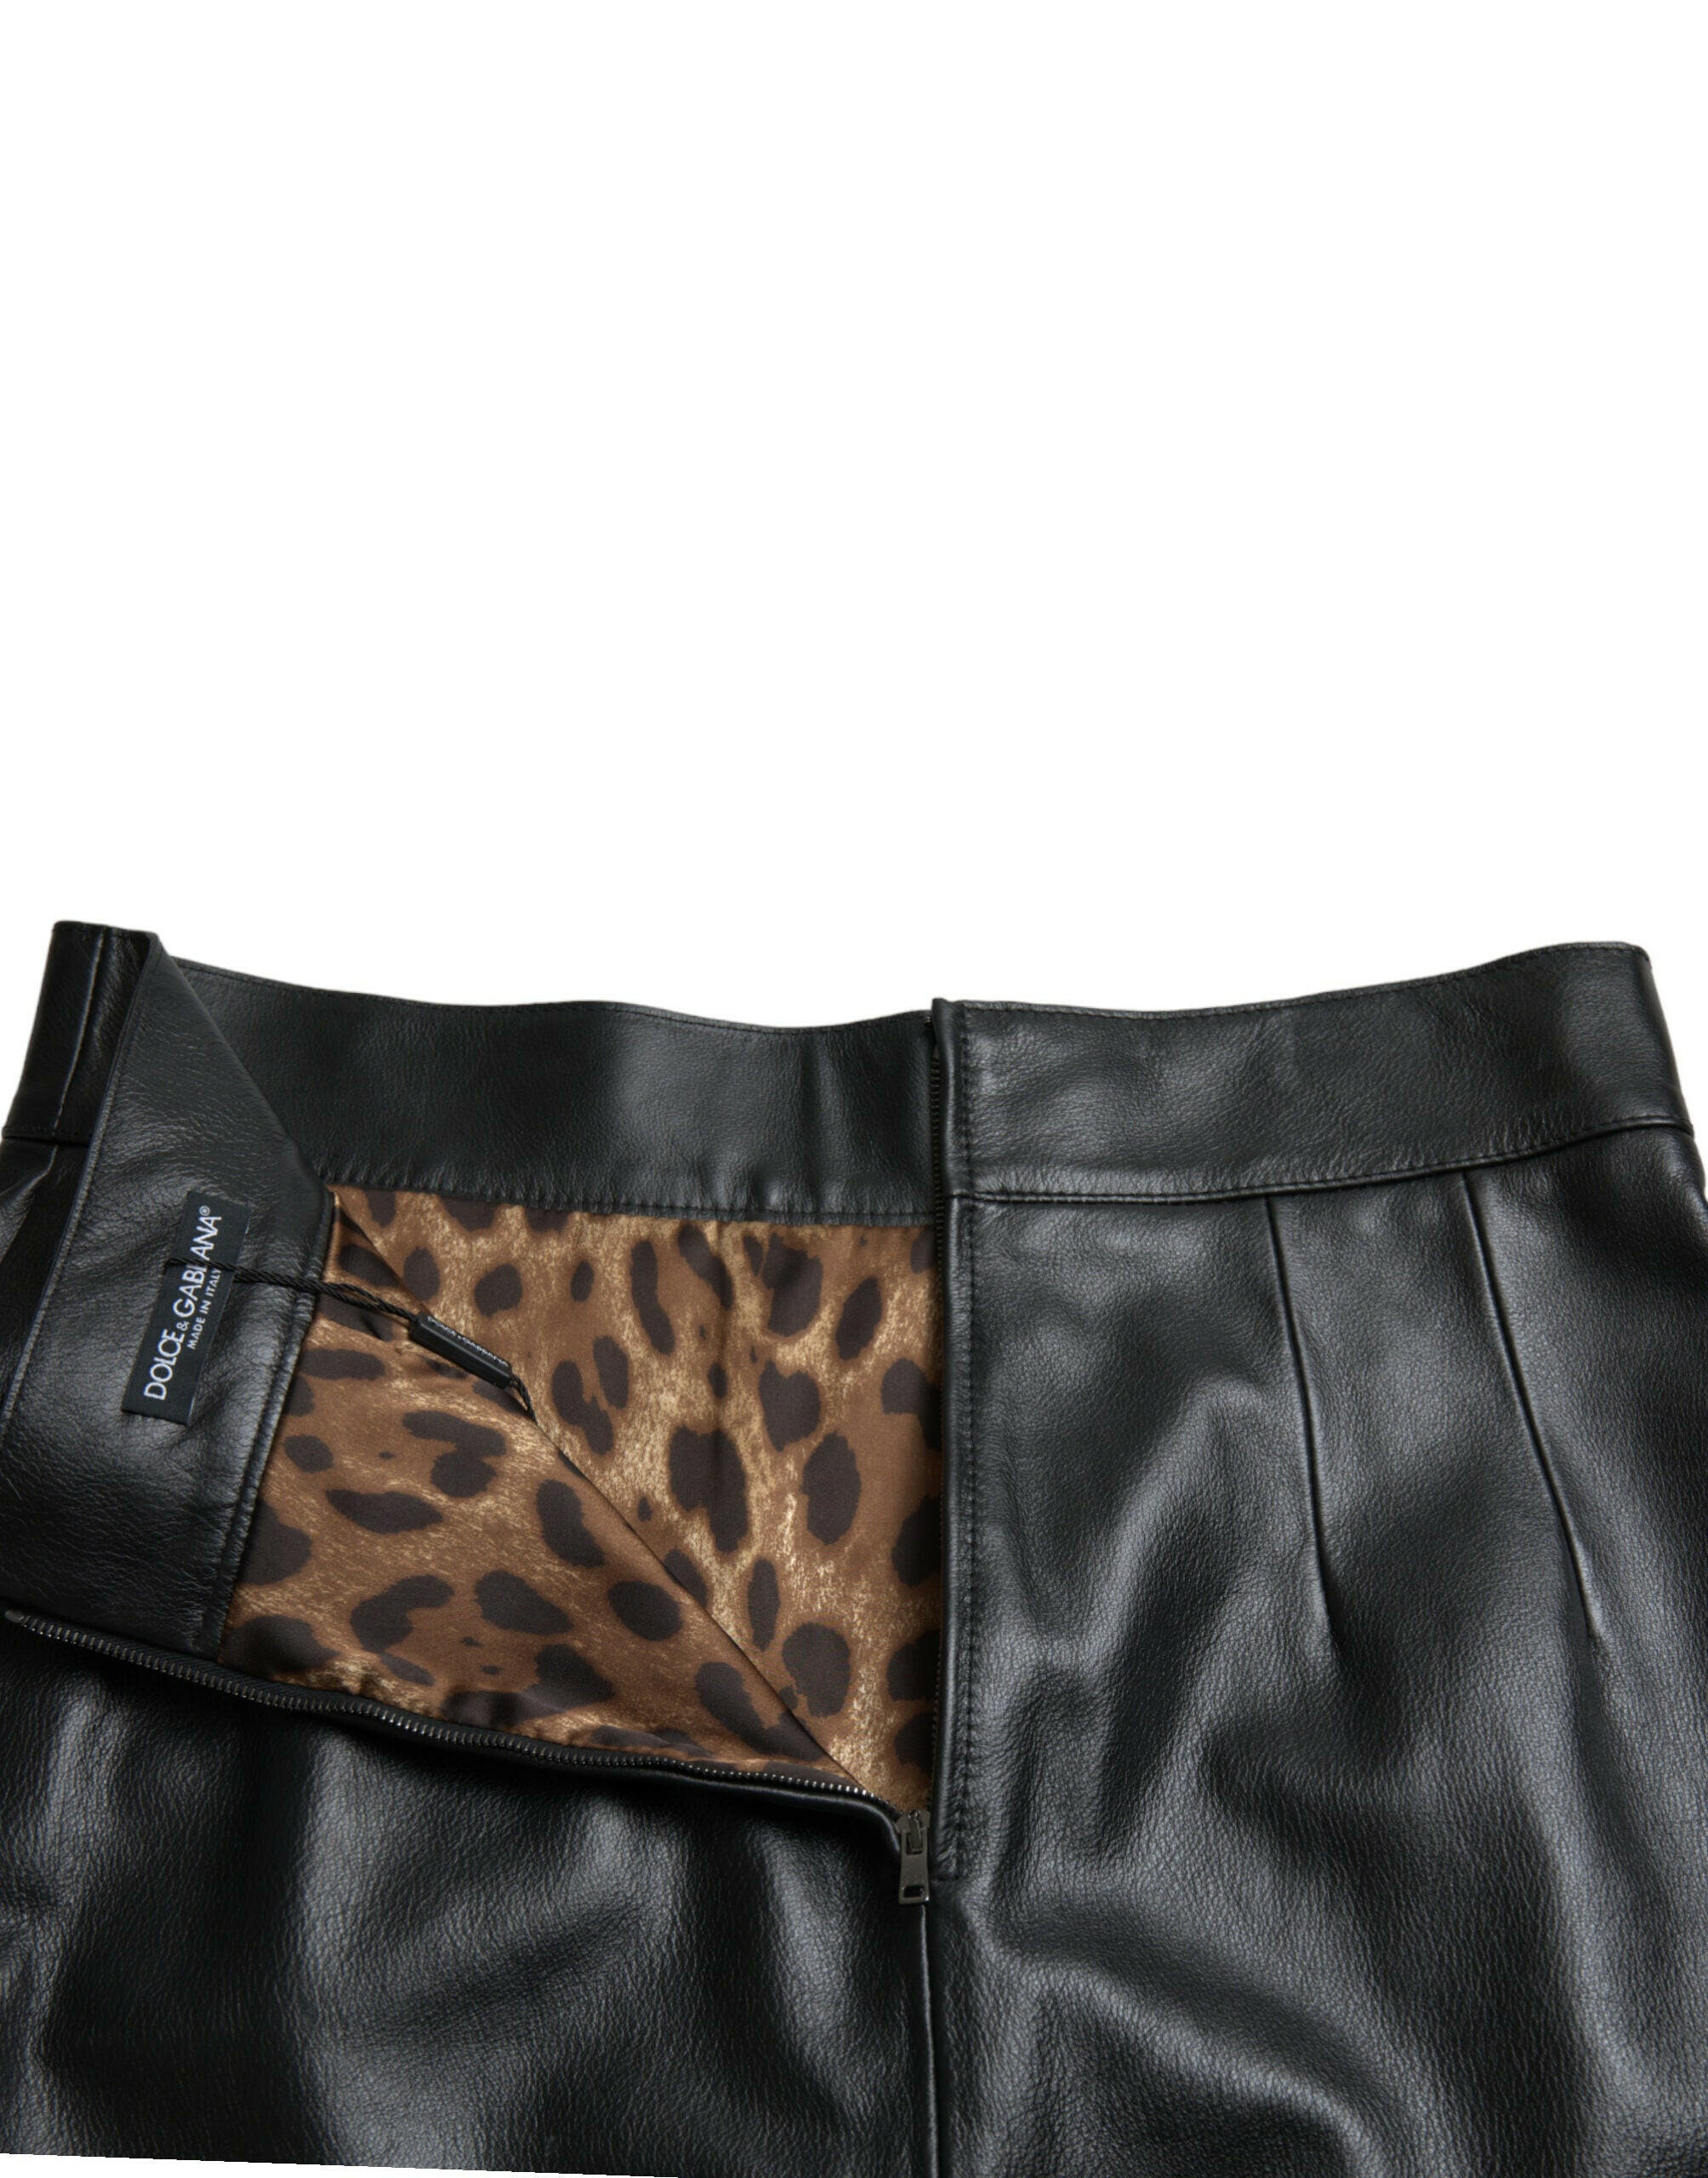 Dolce & Gabbana Black Leather High Waist A-line Mini Skirt.